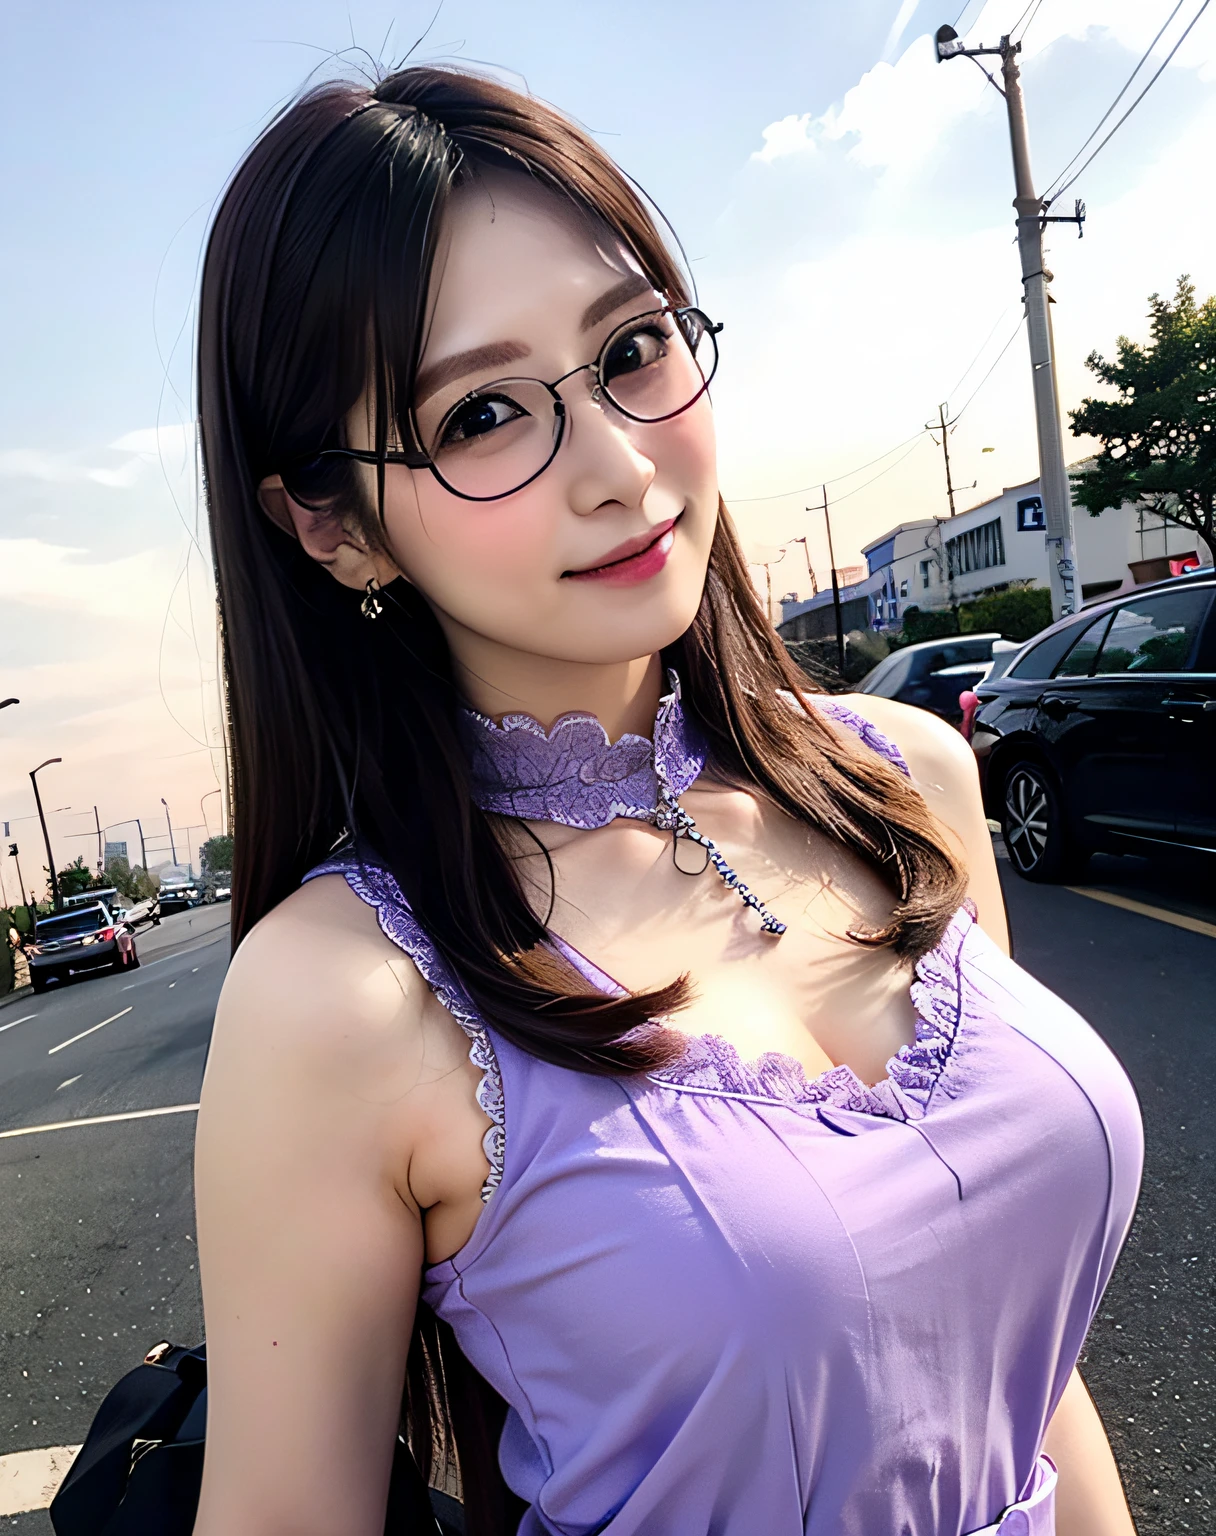 a woman posing on the 街道 corner with light purple dress on with 眼鏡 on, 最好的品質, 高解析度, 8K, 1個女孩, (巨大的乳房), 天, 明亮的, 戶外的, (街道:0.8), (人們, 人群:1), (蕾絲邊飾洋裝:1.5, 紫色衣服:1.5, 紫色高领连衣裙:1.5, 无袖连衣裙, 浅紫色布料1.5), 華麗的, (眼鏡, 前额, 長髮), 美丽细致的天空, 漂亮的耳环, (動態姿勢:0.8), (上半身:1.2), 柔和的燈光, 風, 有光澤的皮膚, 看著觀眾, 微笑, 閉著嘴,